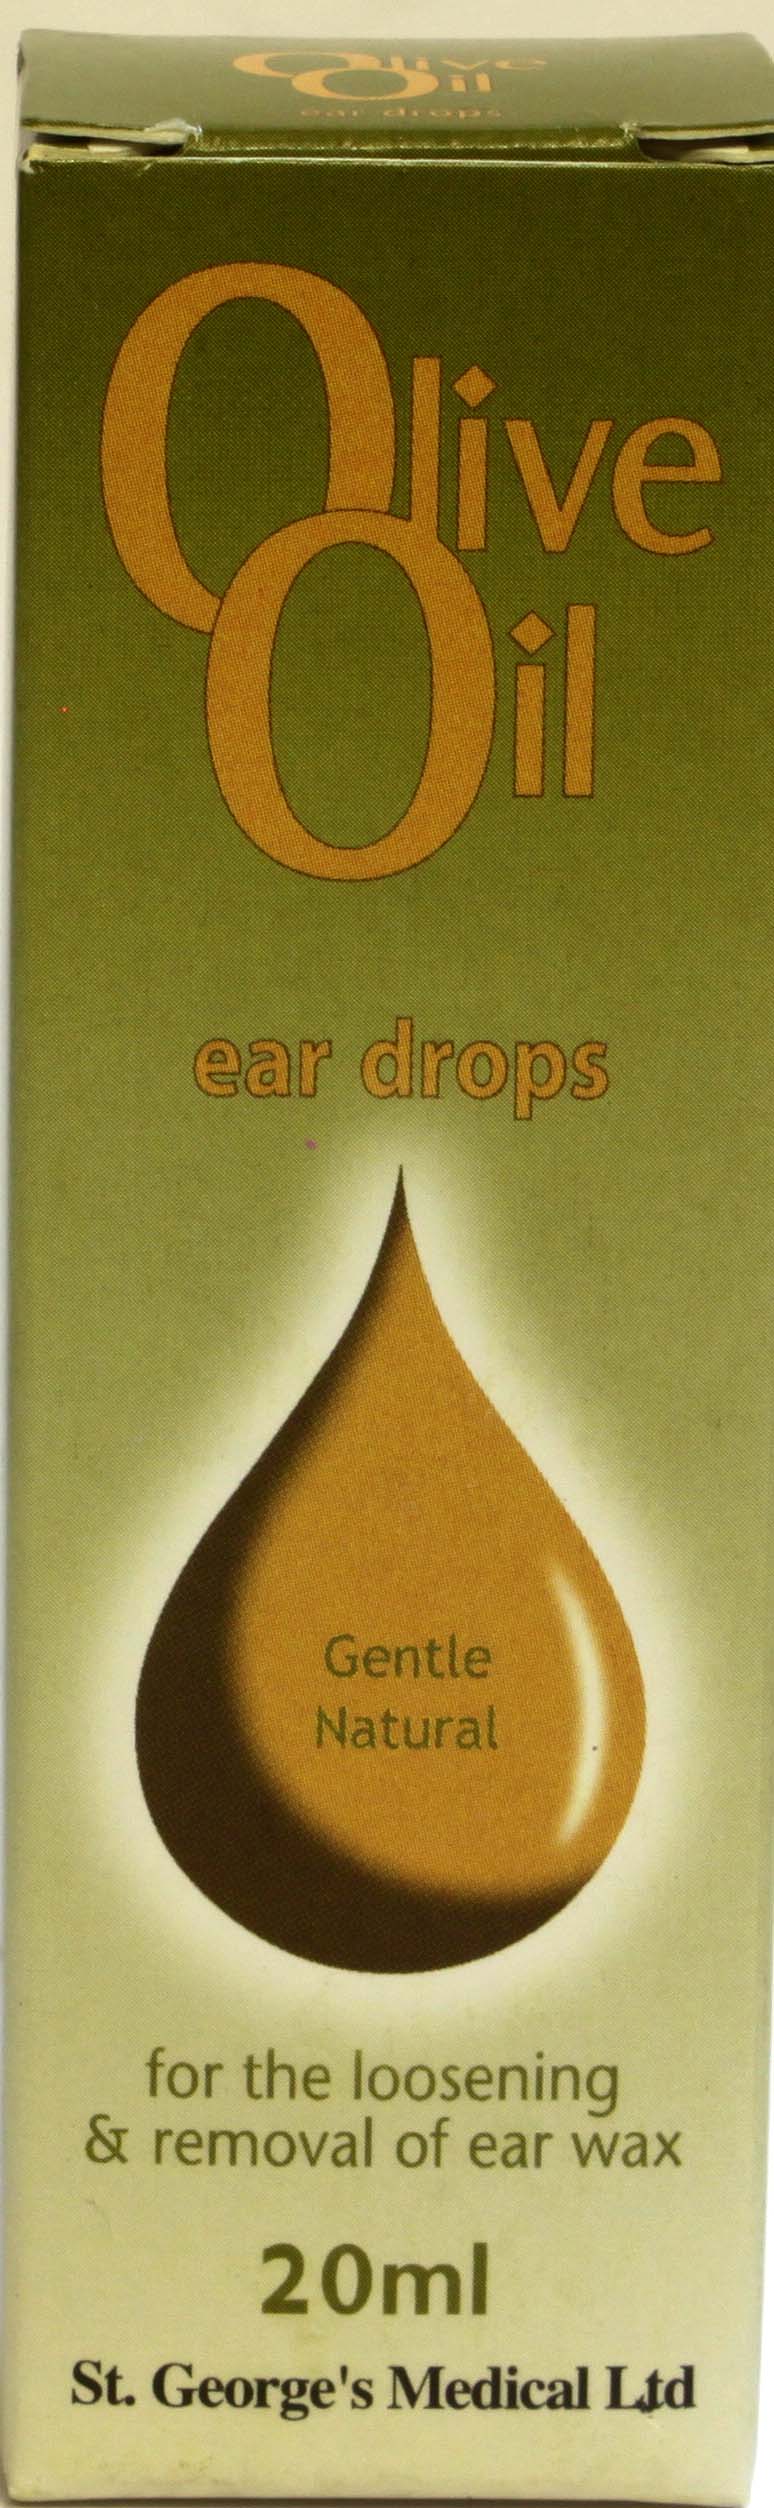 Olive Oil Ear Drops - 20ml